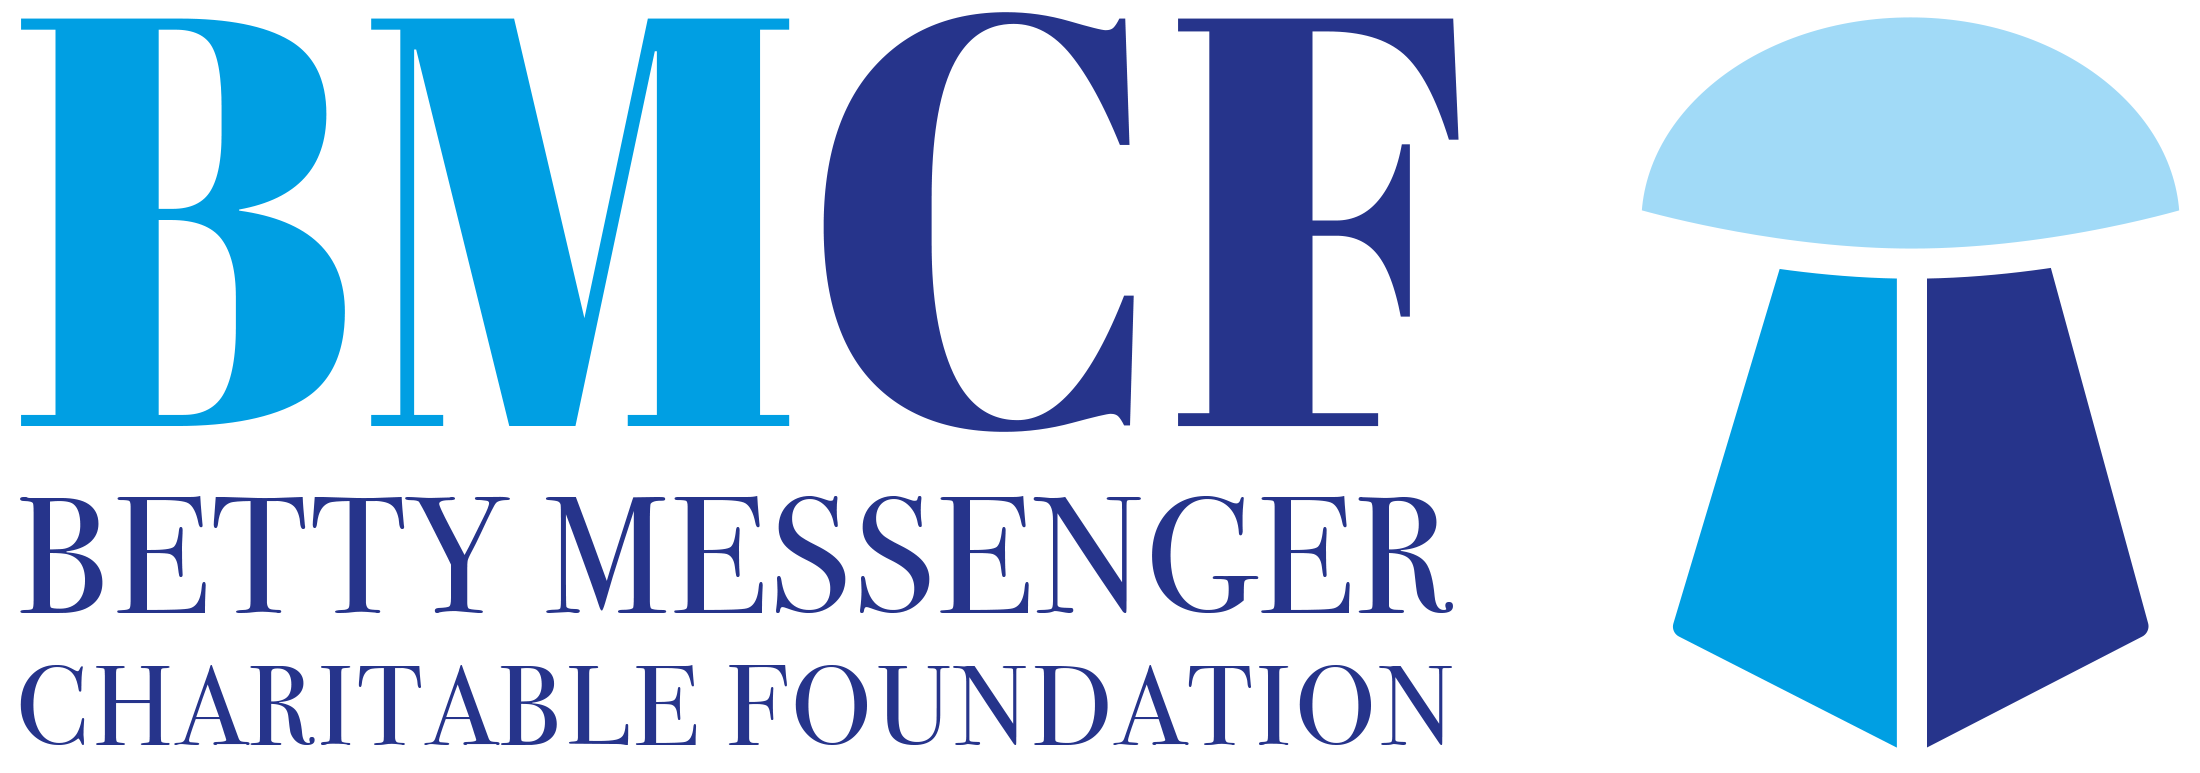 Betty Messenger Charitable Foundation logo